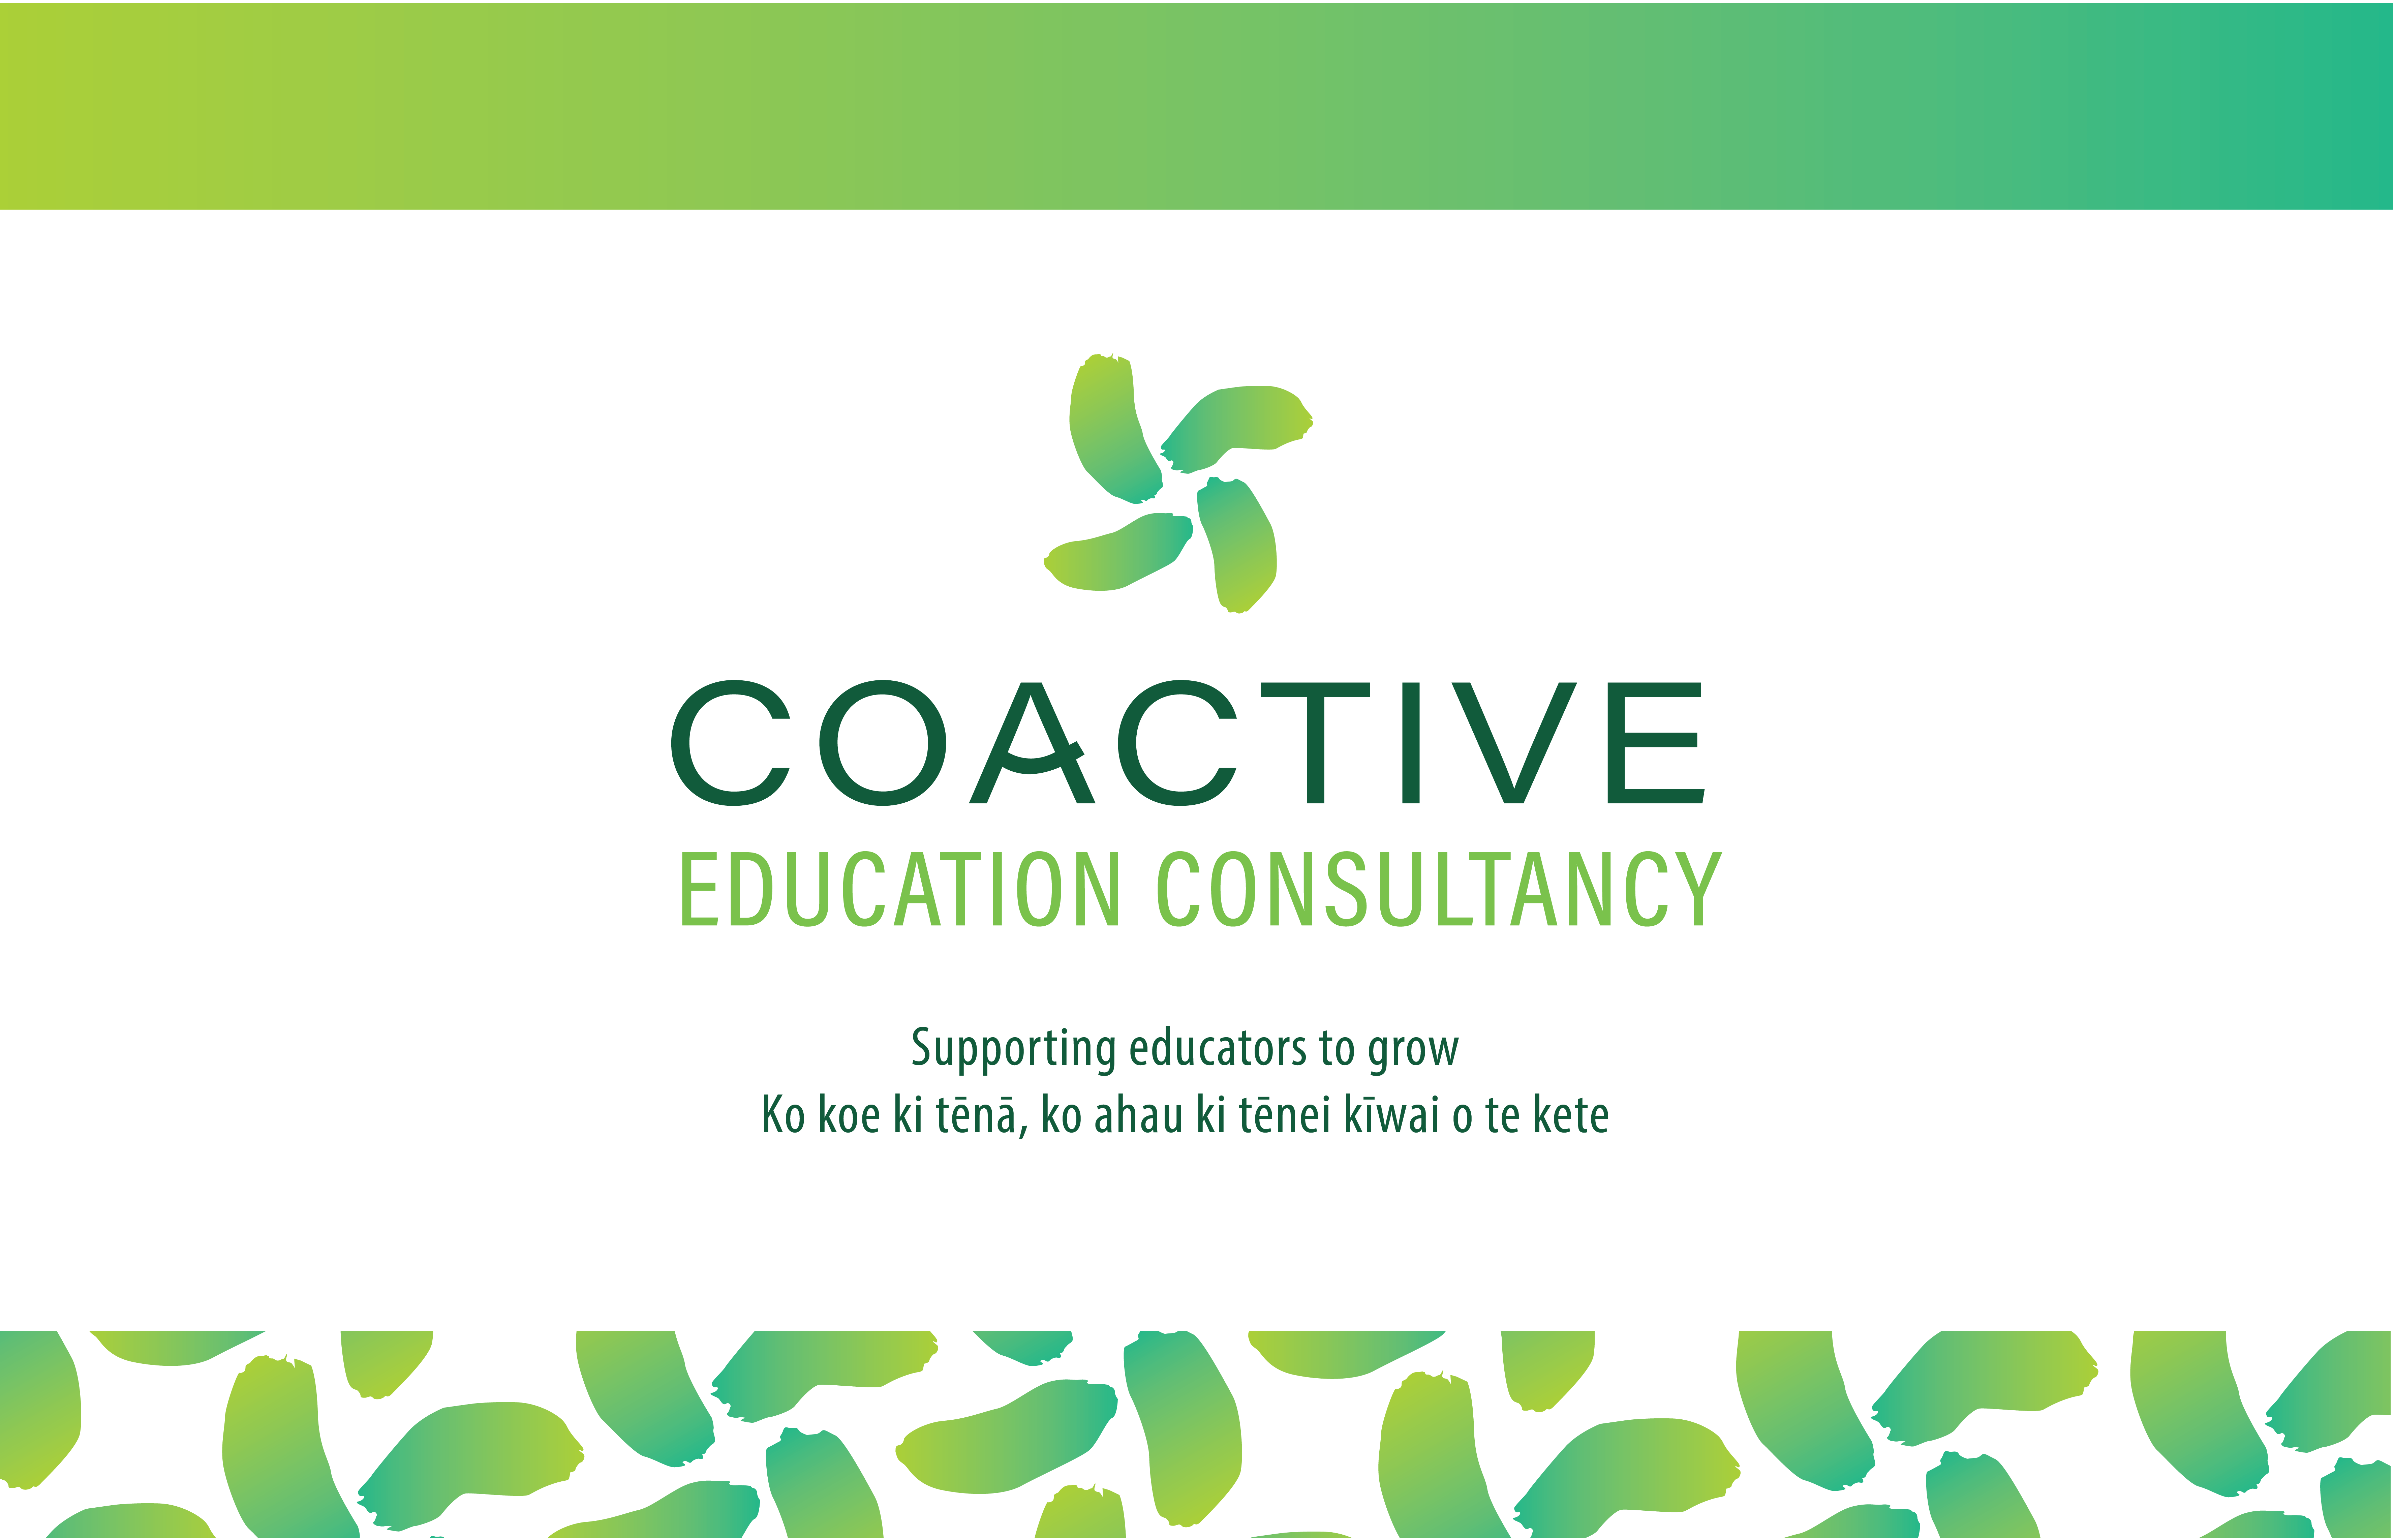 Coactive Education